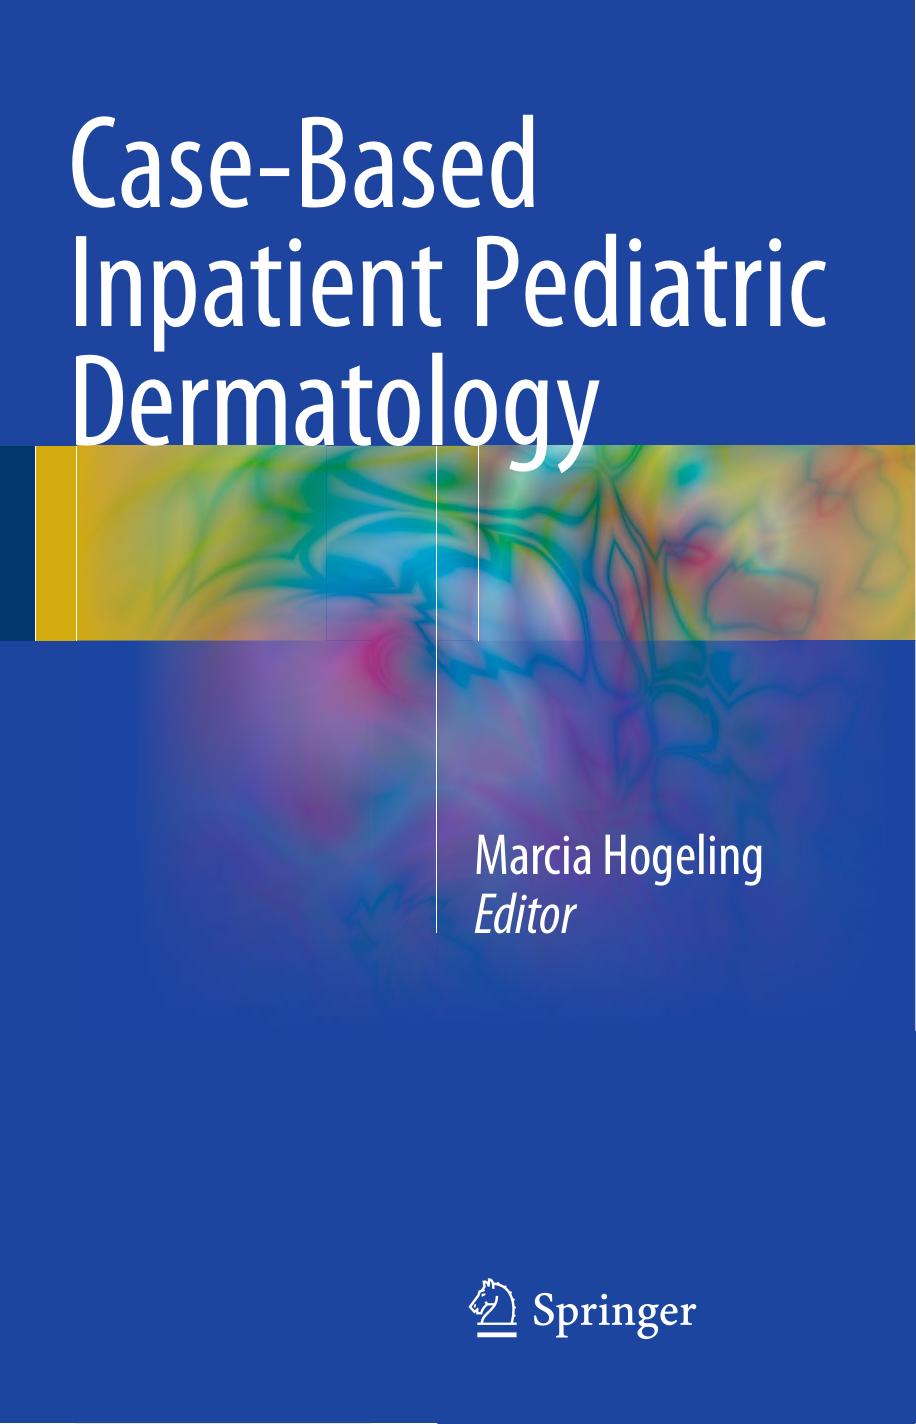 Case-Based Inpatient Pediatric Dermatology 2016